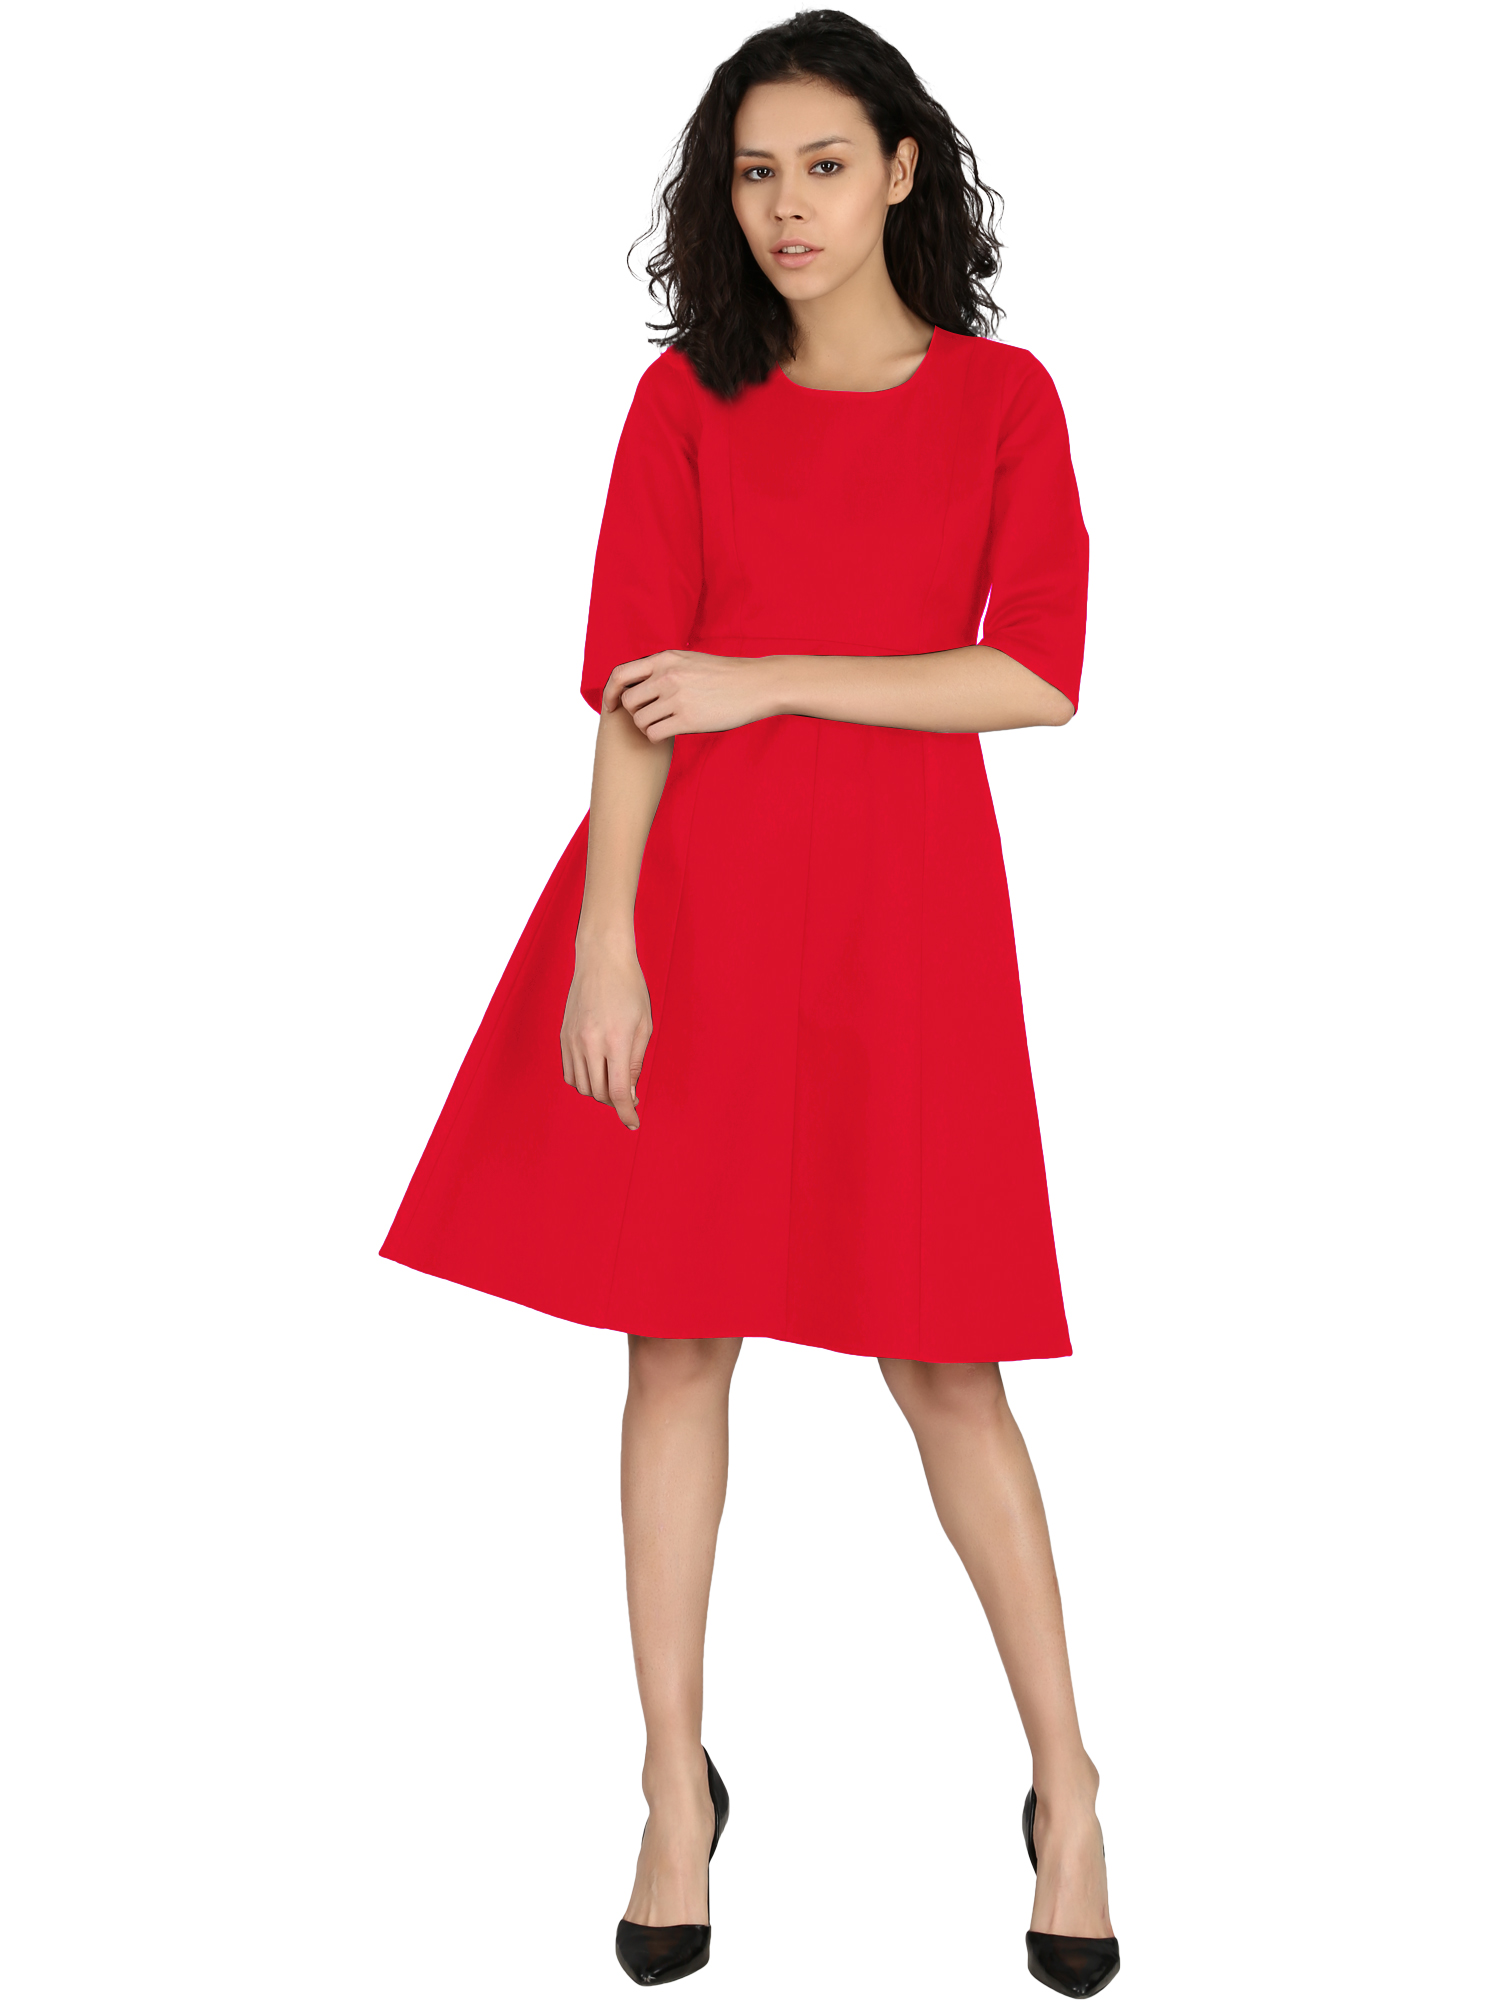 Fitted Sleeve Sheath Work Wear Dress Red -0